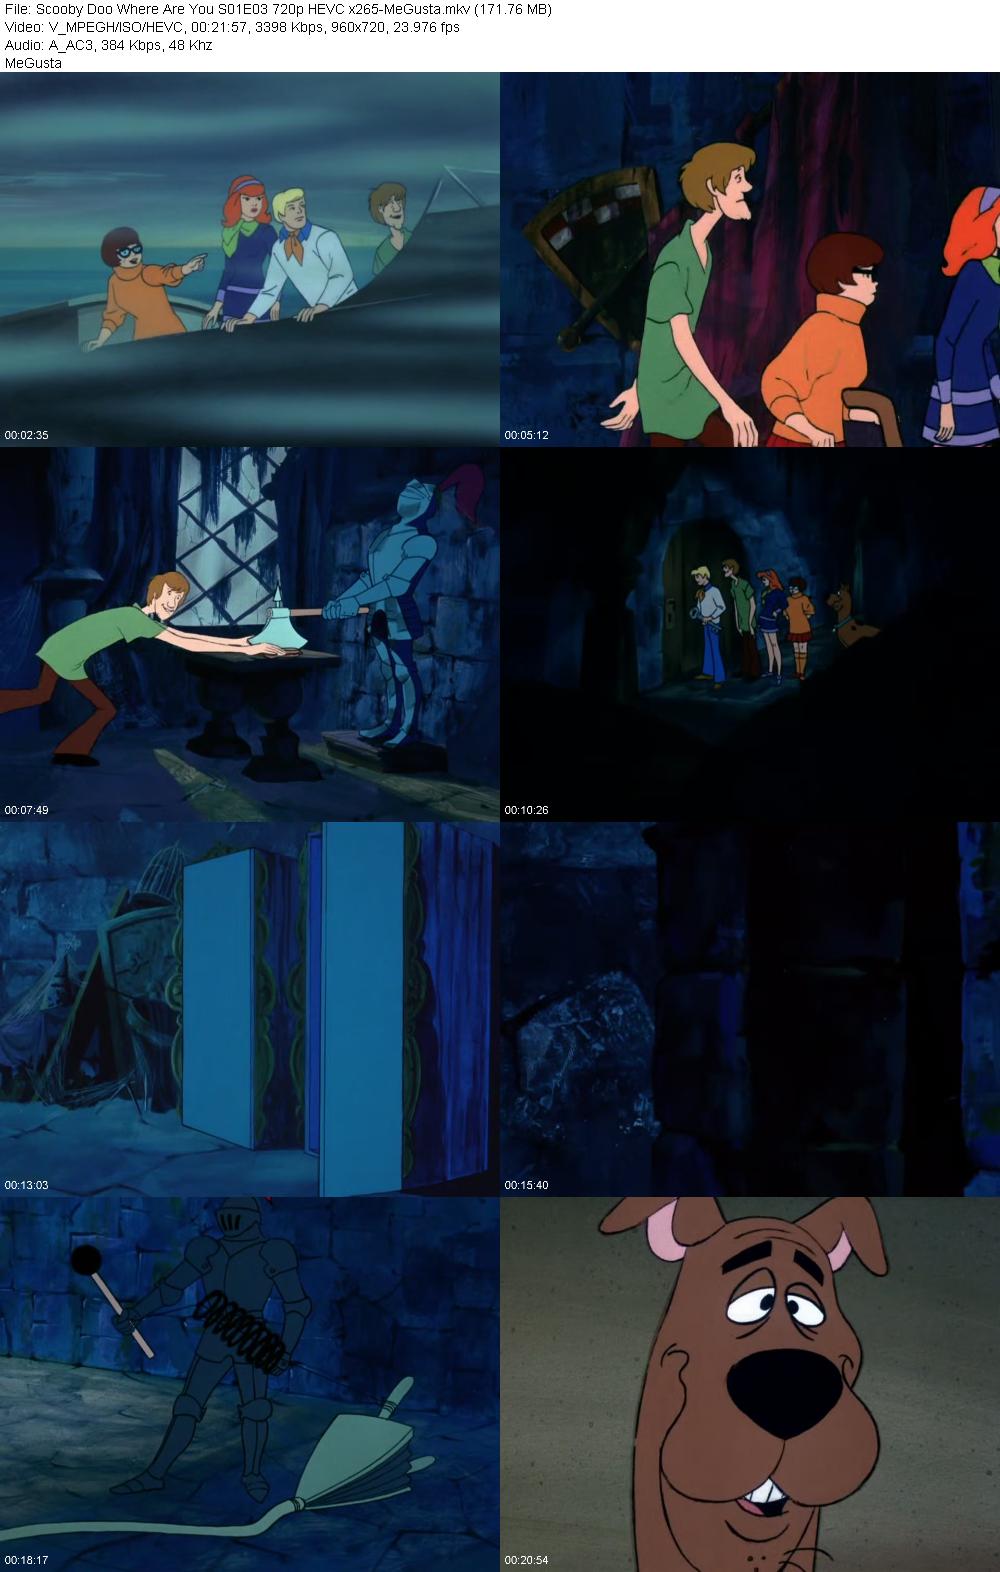 Scooby Doo Where Are You S01E03 720p HEVC x265